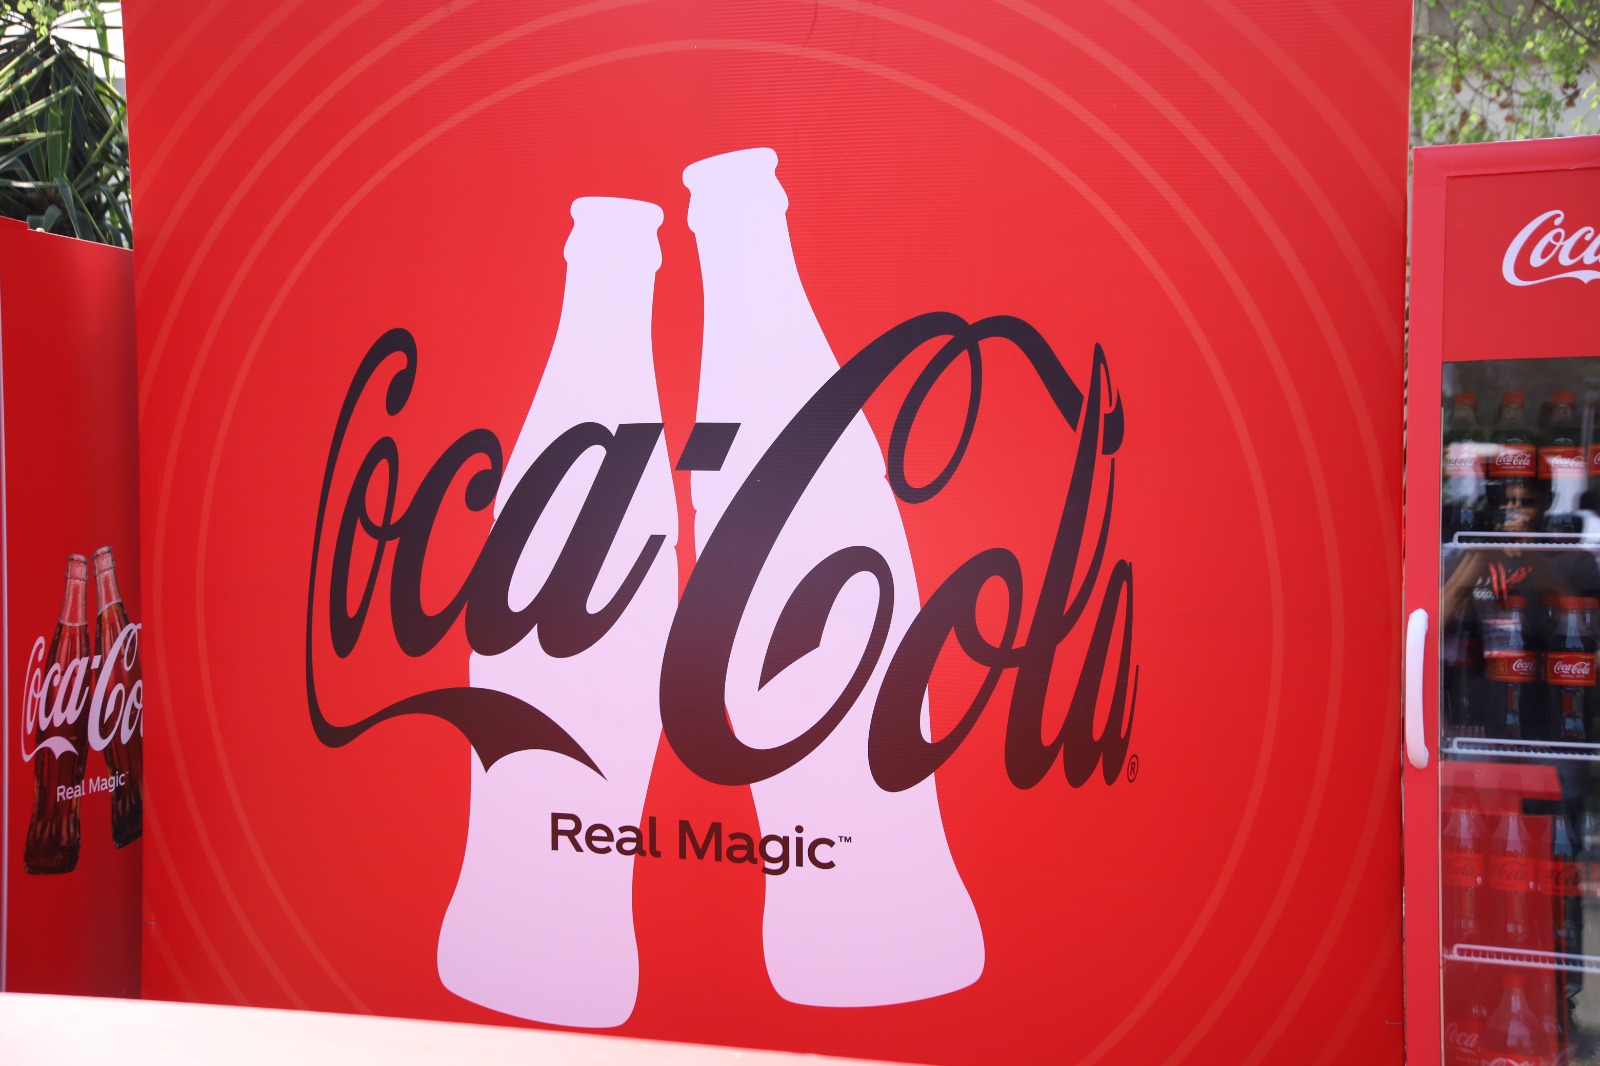 Coca Cola joins PICC as Platinum sponsor